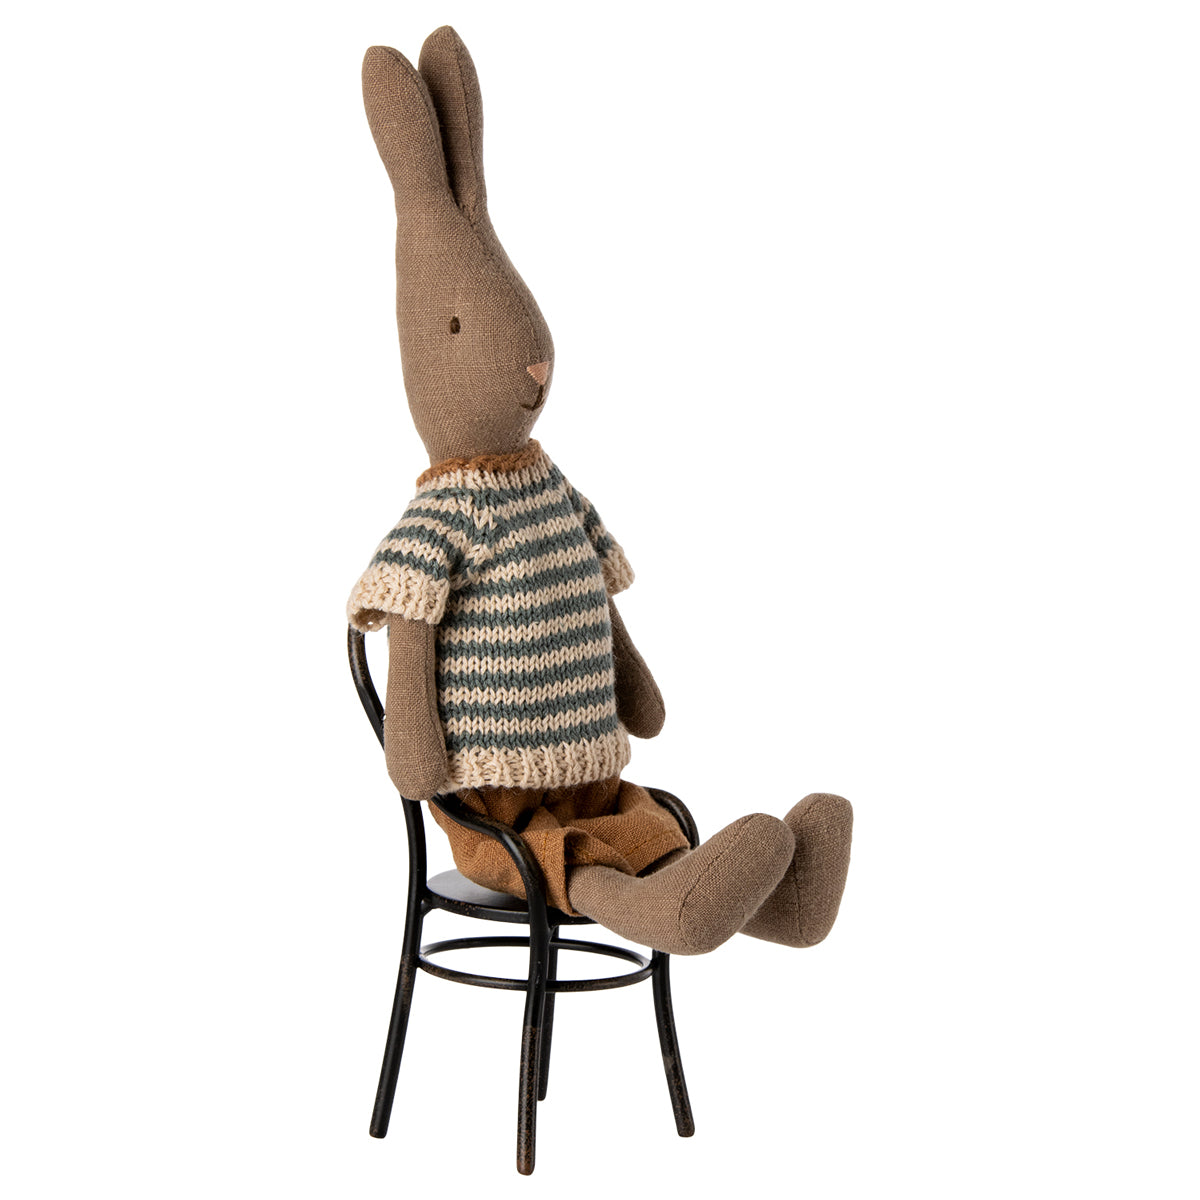 Maileg Rabbit Size 1, Brown - Shirt and shorts 16-3105-00